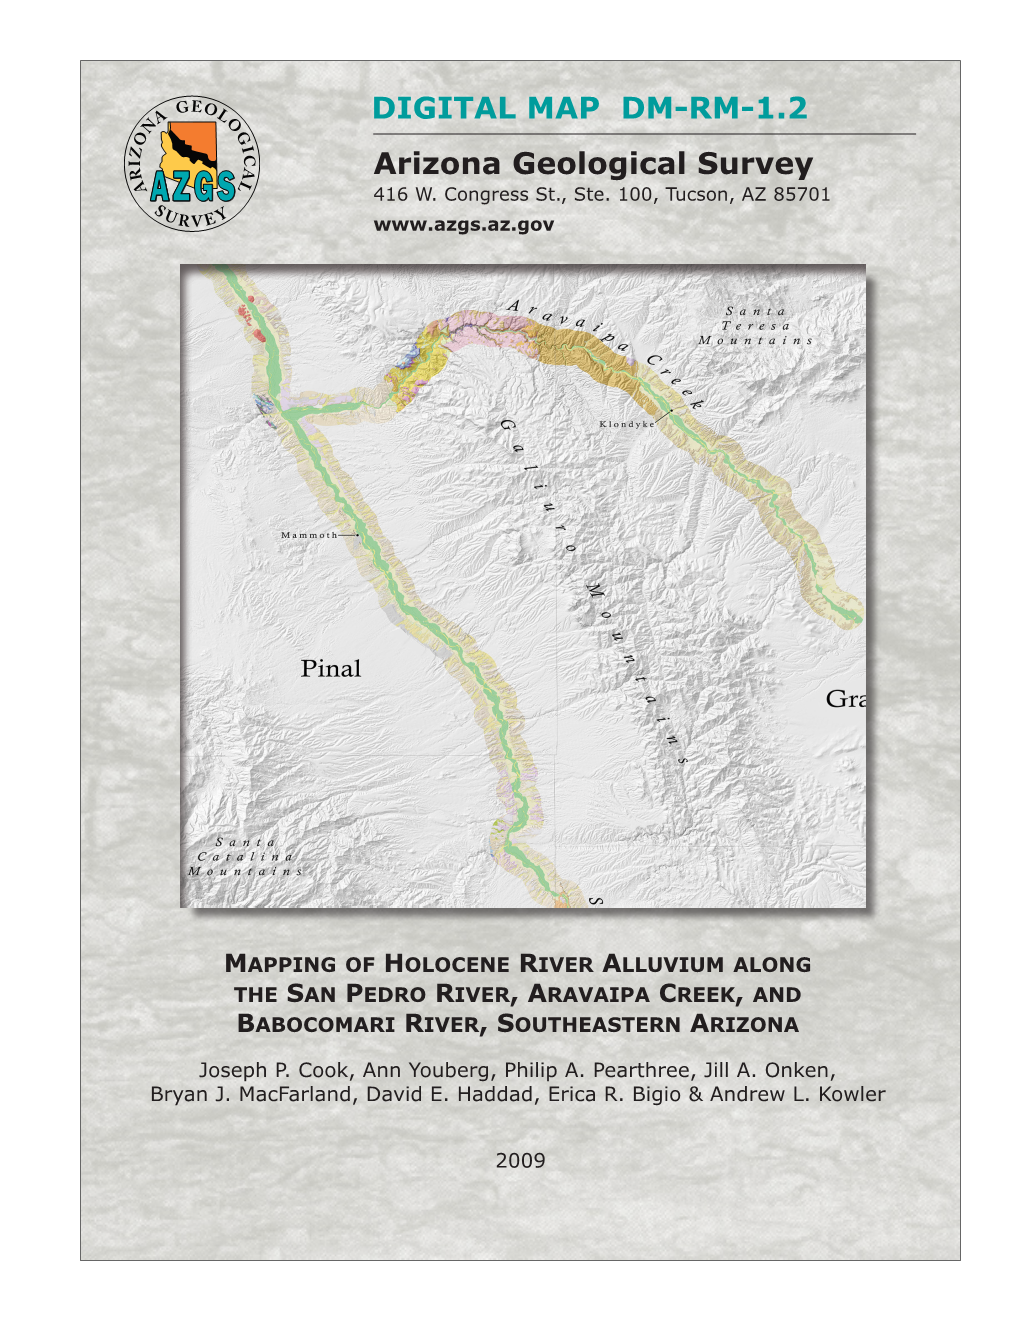 Mapping of Holocene River Alluvium Along the San Pedro River, Aravaipa Creek, and Babocomari River, Southeastern Arizona